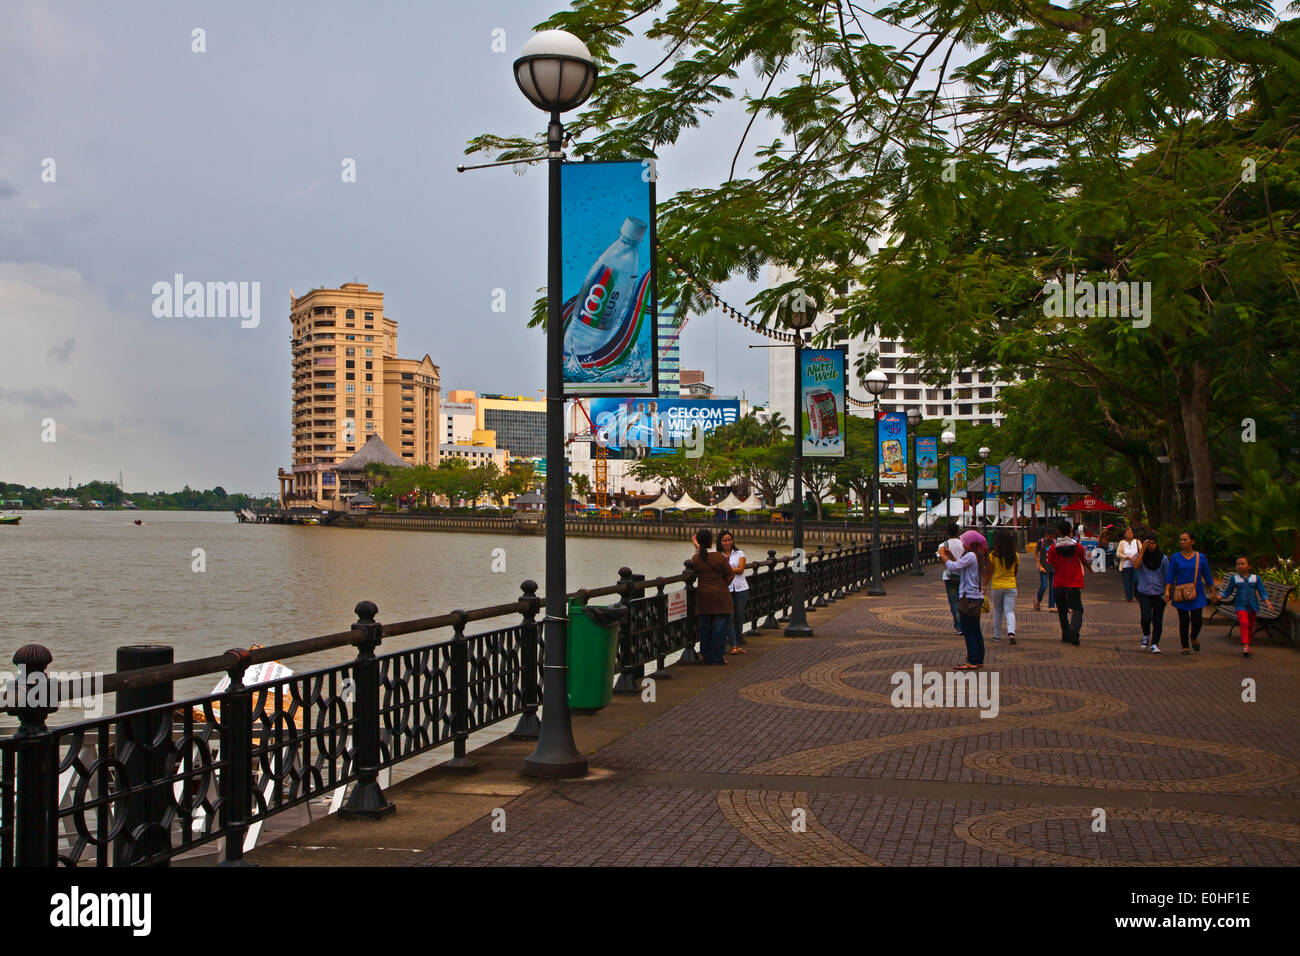 A WALKWAY along the KUCHING RIVER in the city of KUCHING - SARAWAK, BORNEO, MALAYSIA Stock Photo